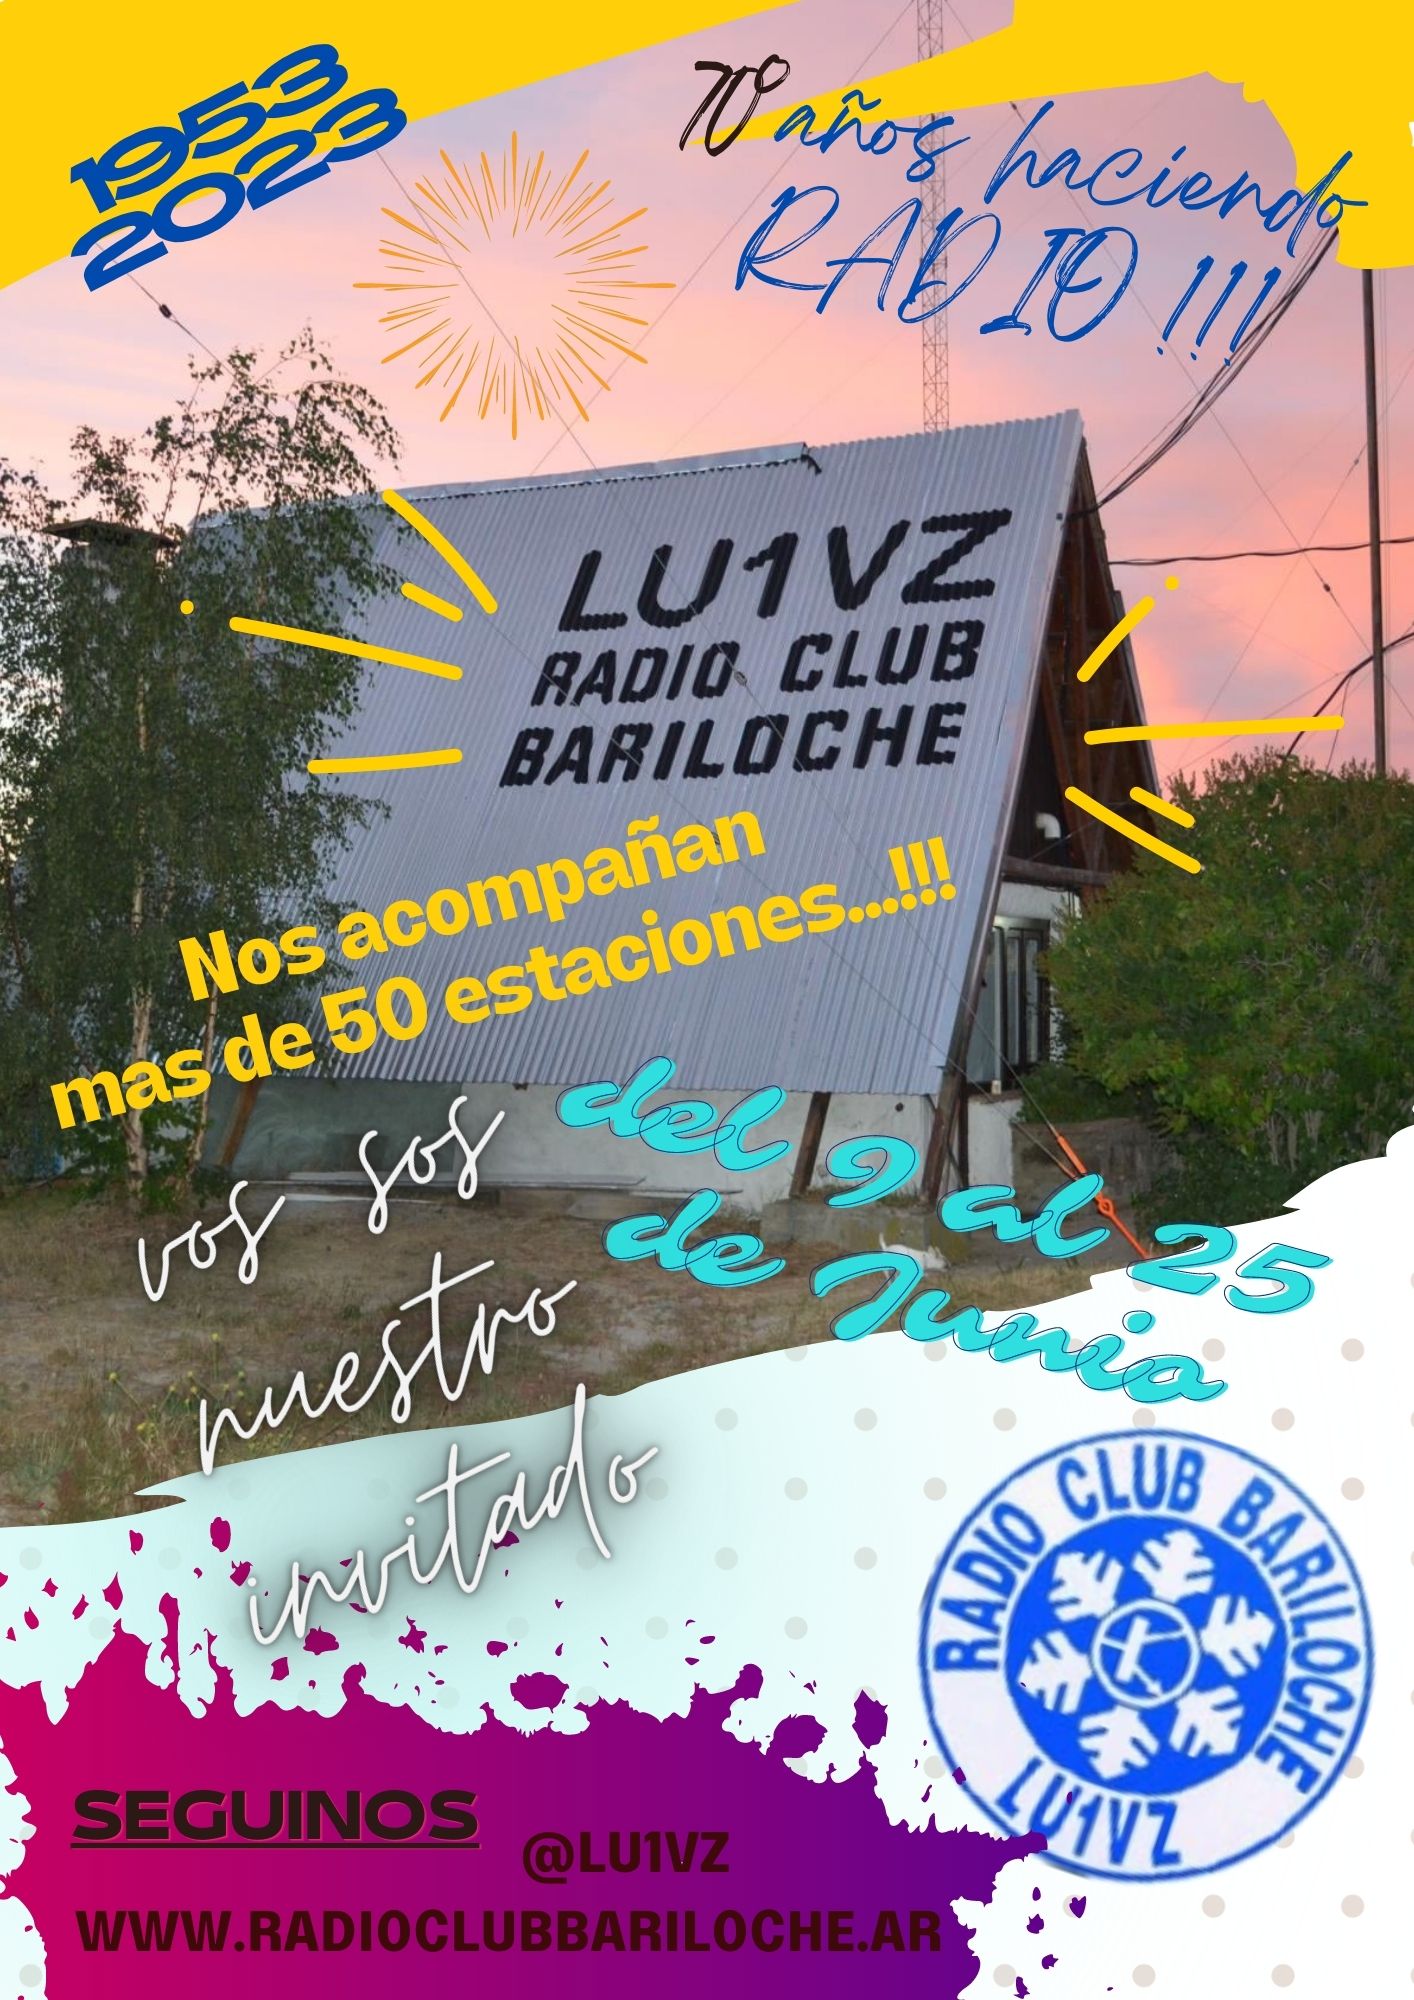 70 aniversario Radio Club BARILOCHE LU1VZ